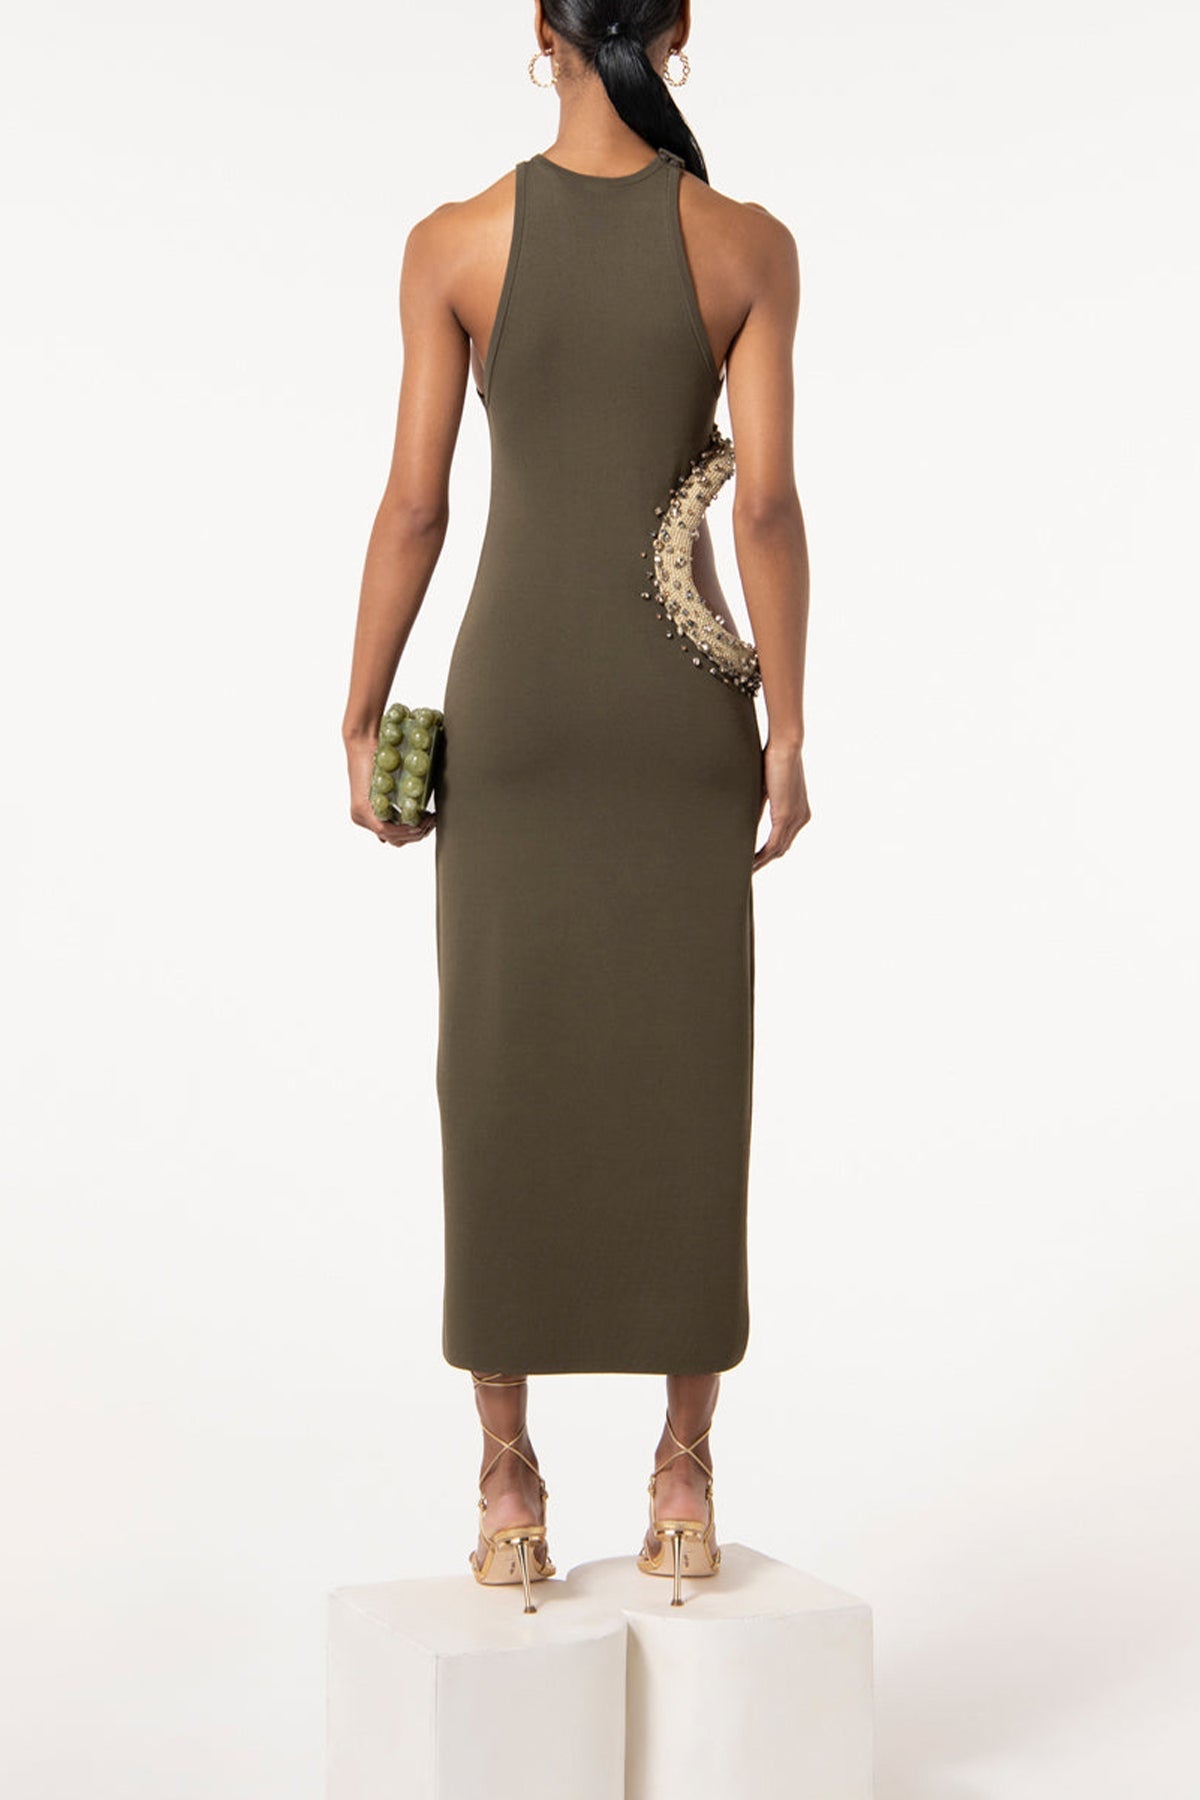 Katina Dress in Advieh - shop-olivia.com